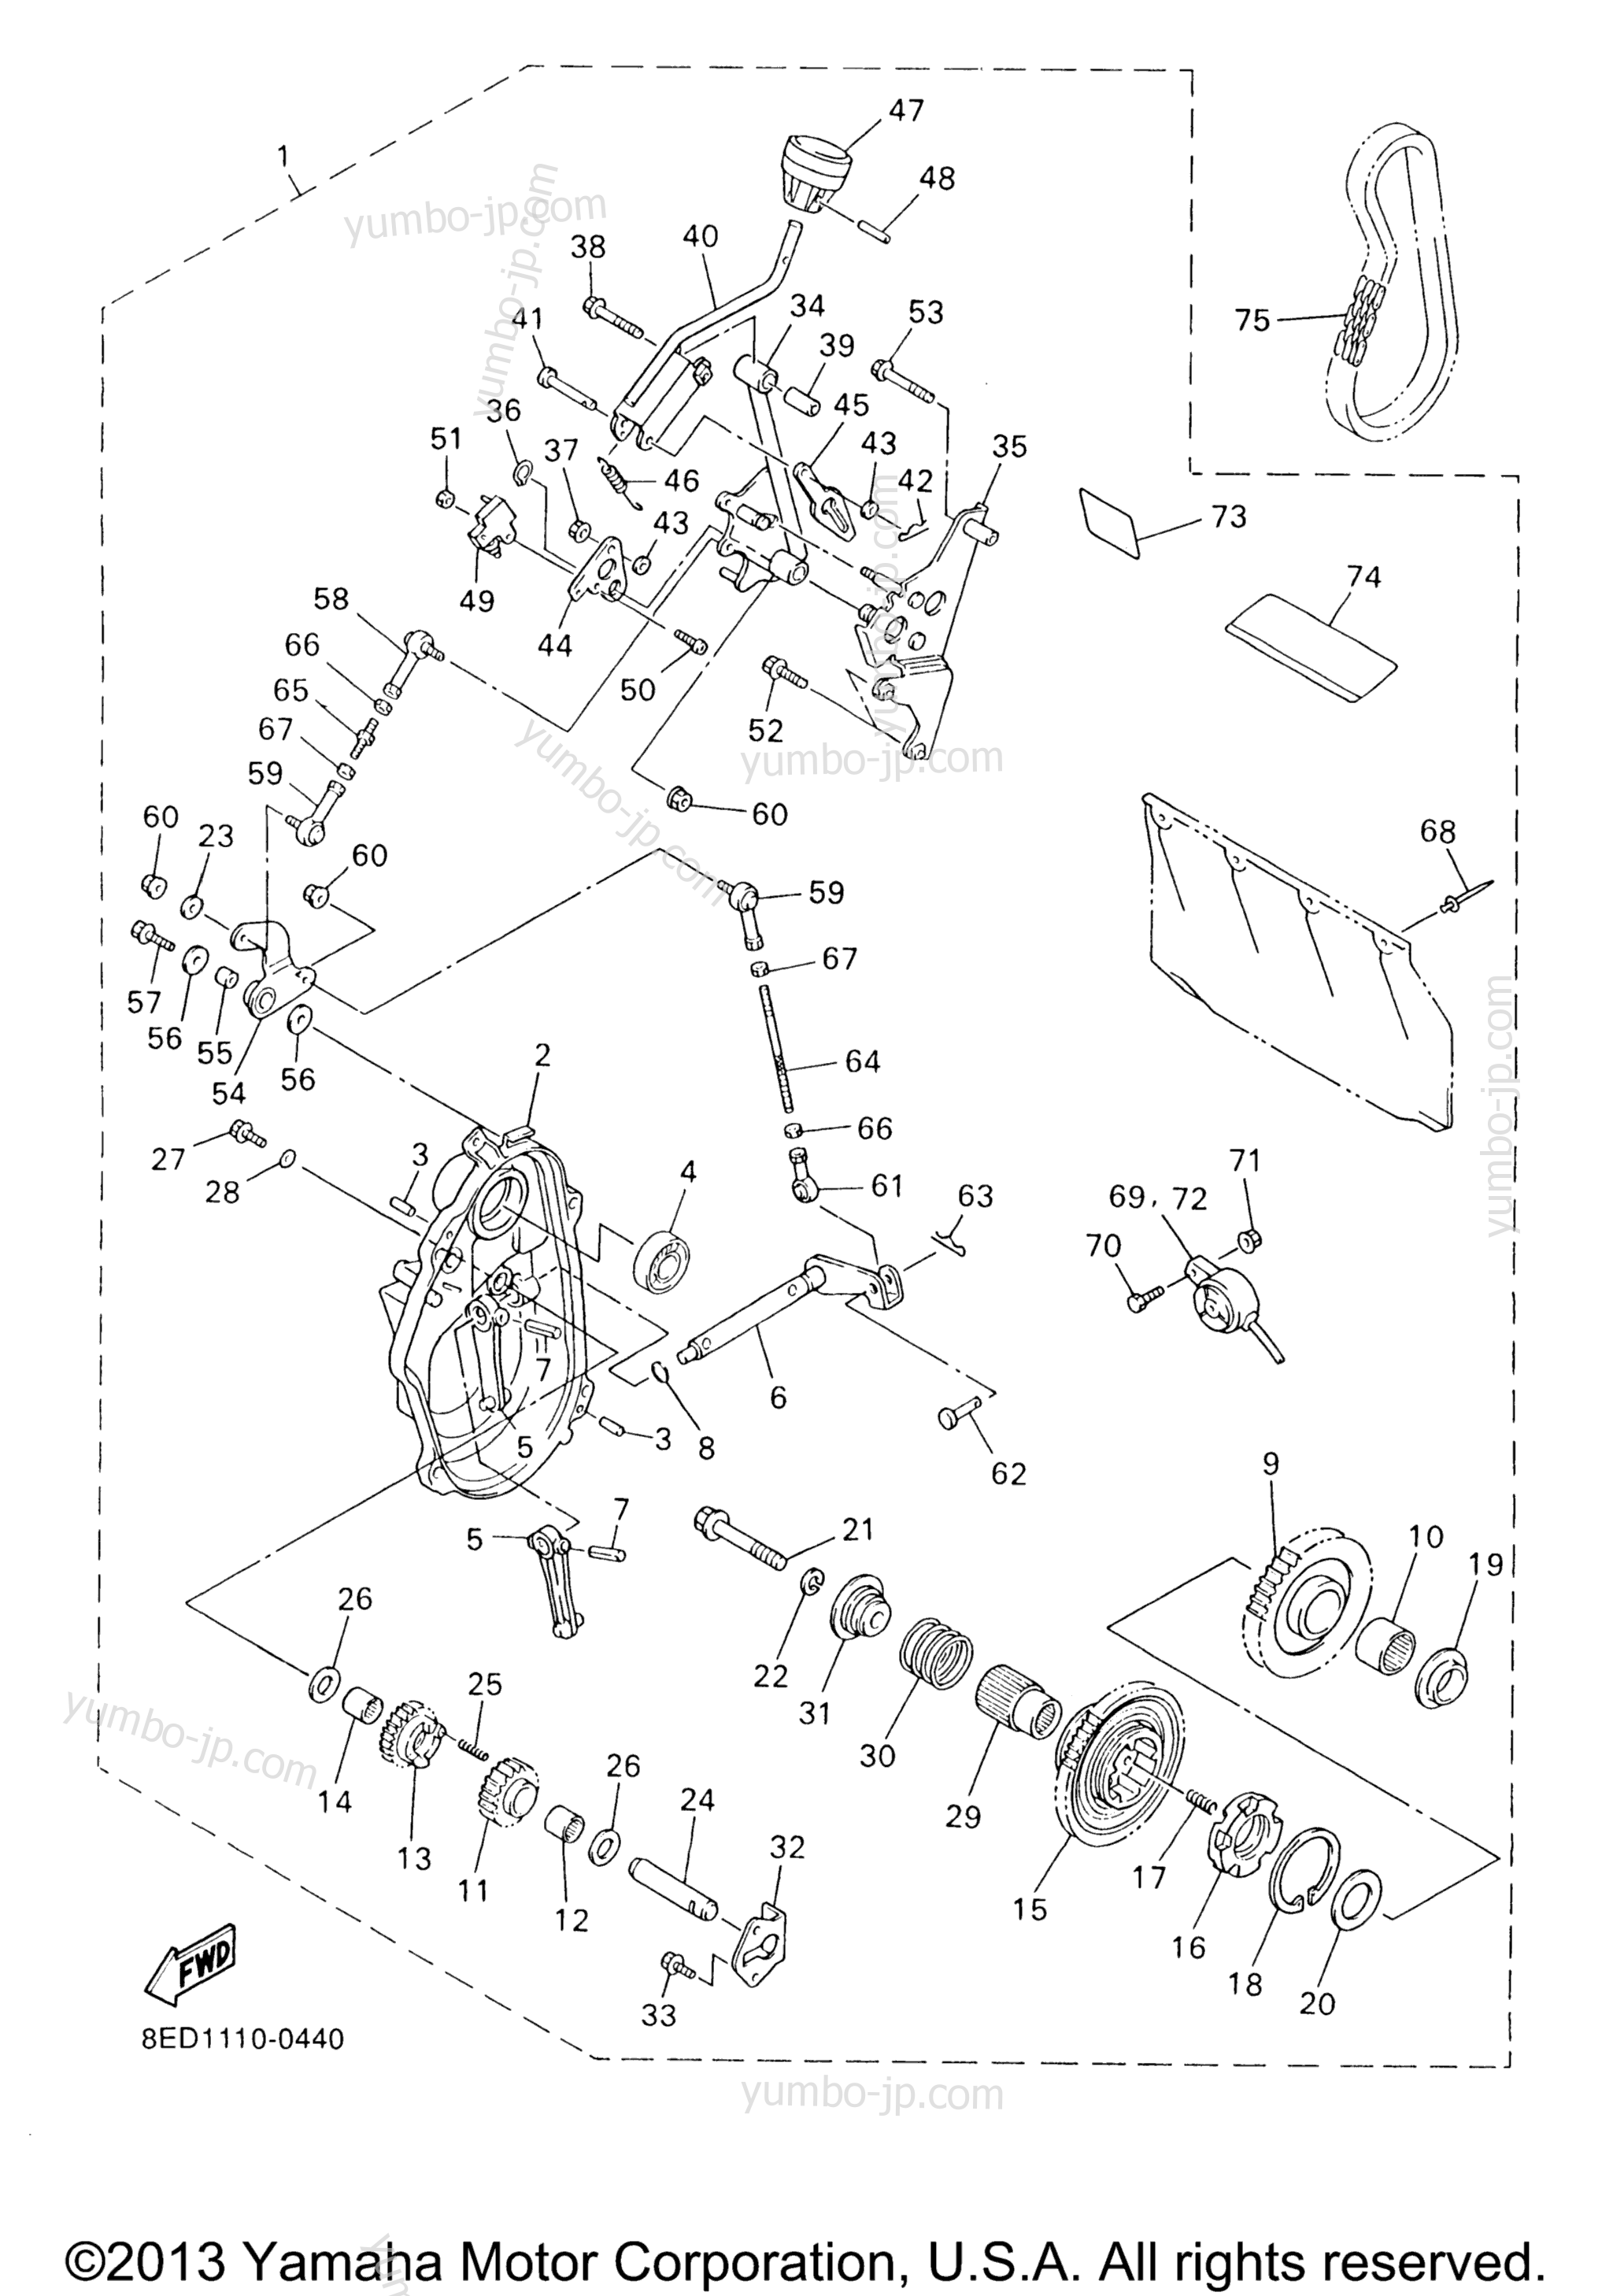 Alternate Reverse Gear Kit для снегоходов YAMAHA MOUNTAIN MAX (MM700D) 2000 г.